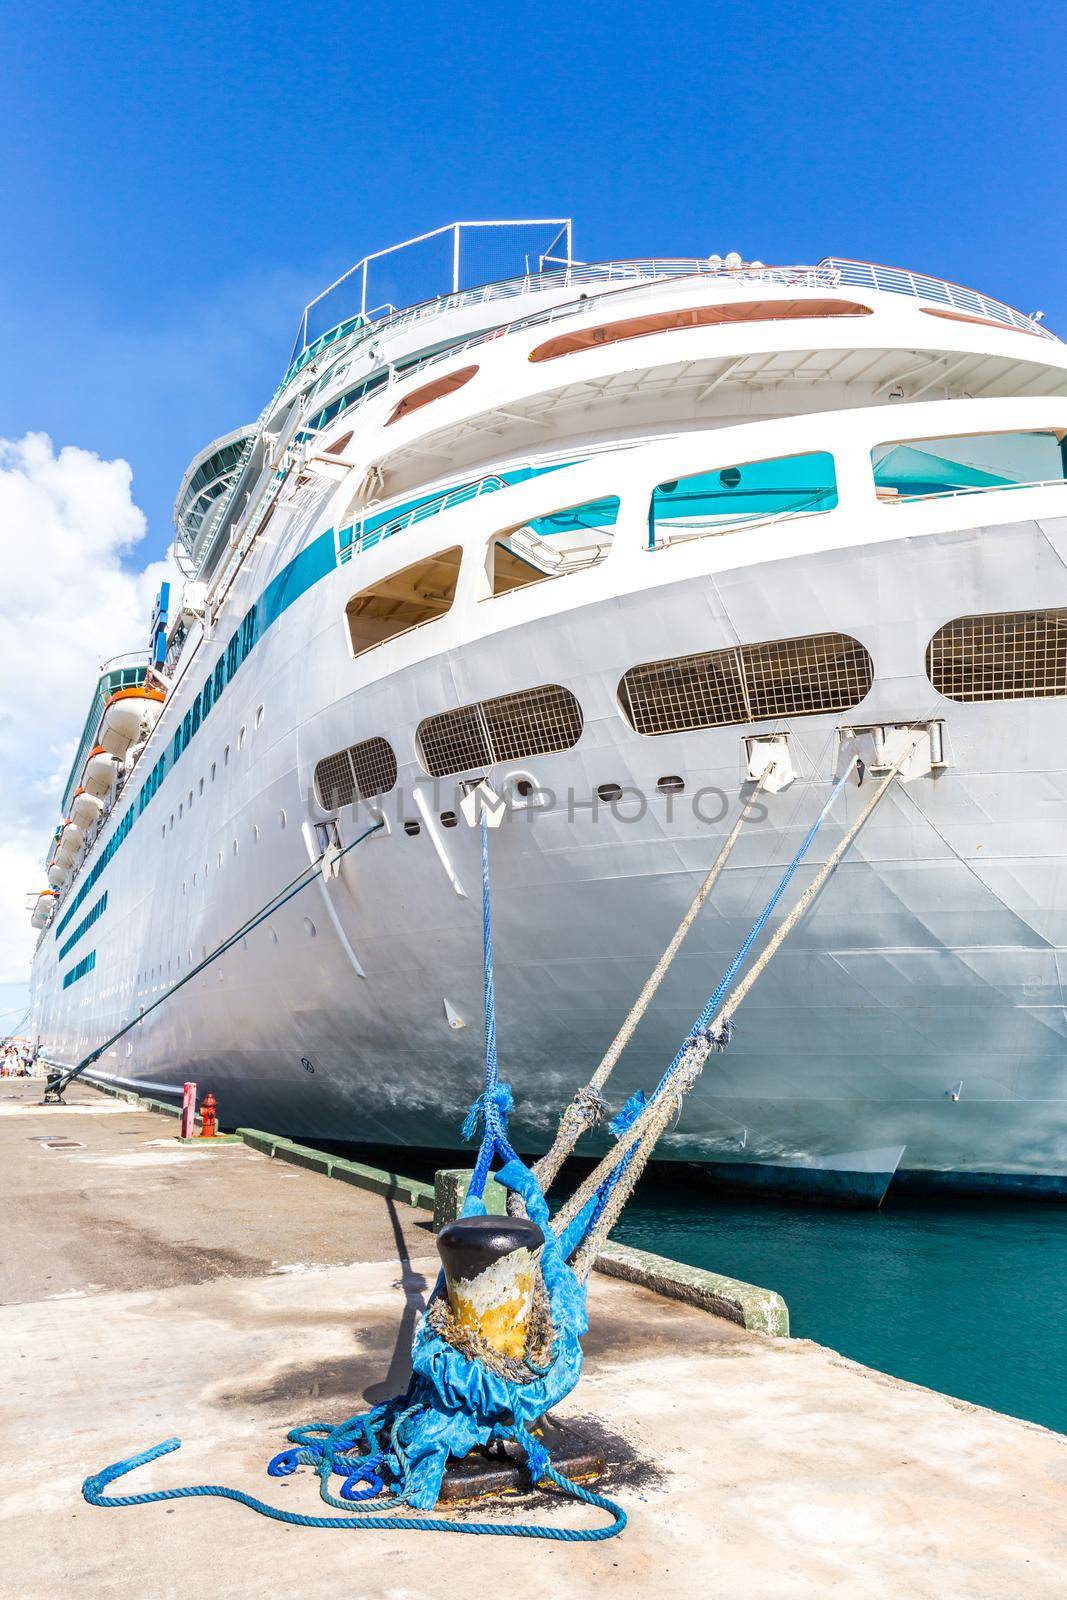 NASSAU, BAHAMAS - SEPTEMBER, 06, 2014: Royal Caribbean's ship, Majesty of the Seas in the Port of the Bahamas on September 06, 2014